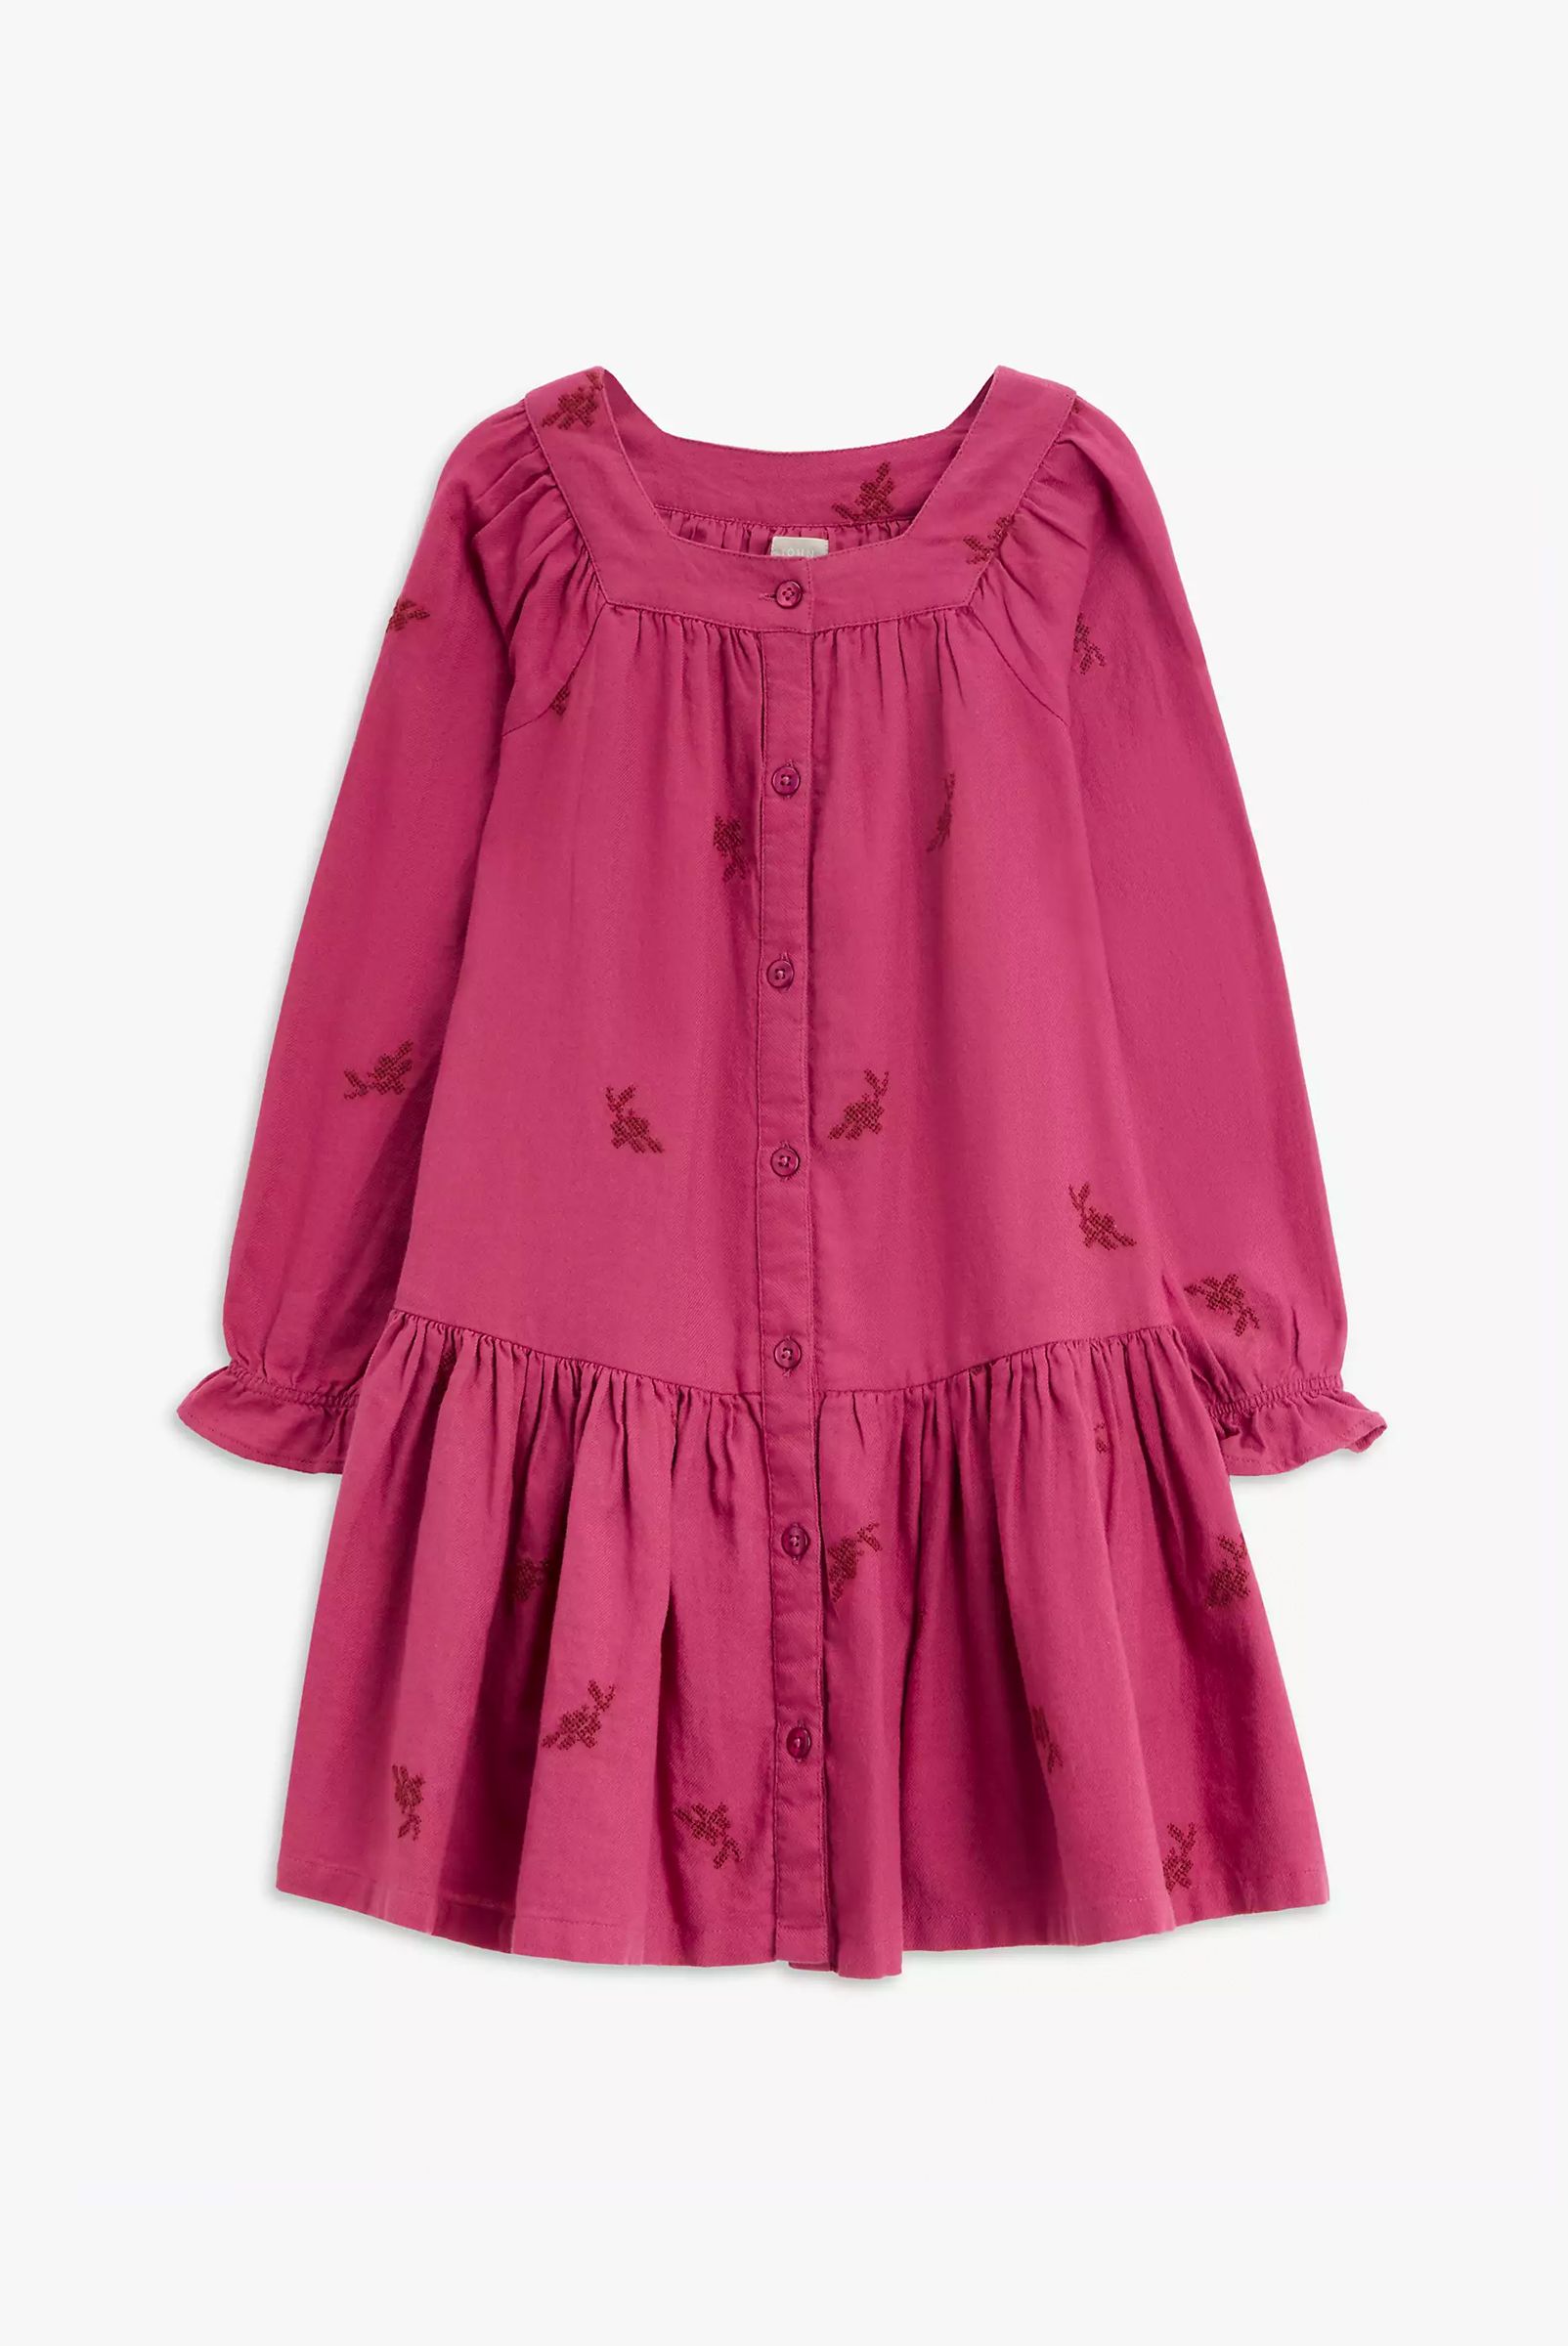 John Lewis Kids' Embroidered Ruffle Shirt Dress, Berry, £20.00 - £24.00